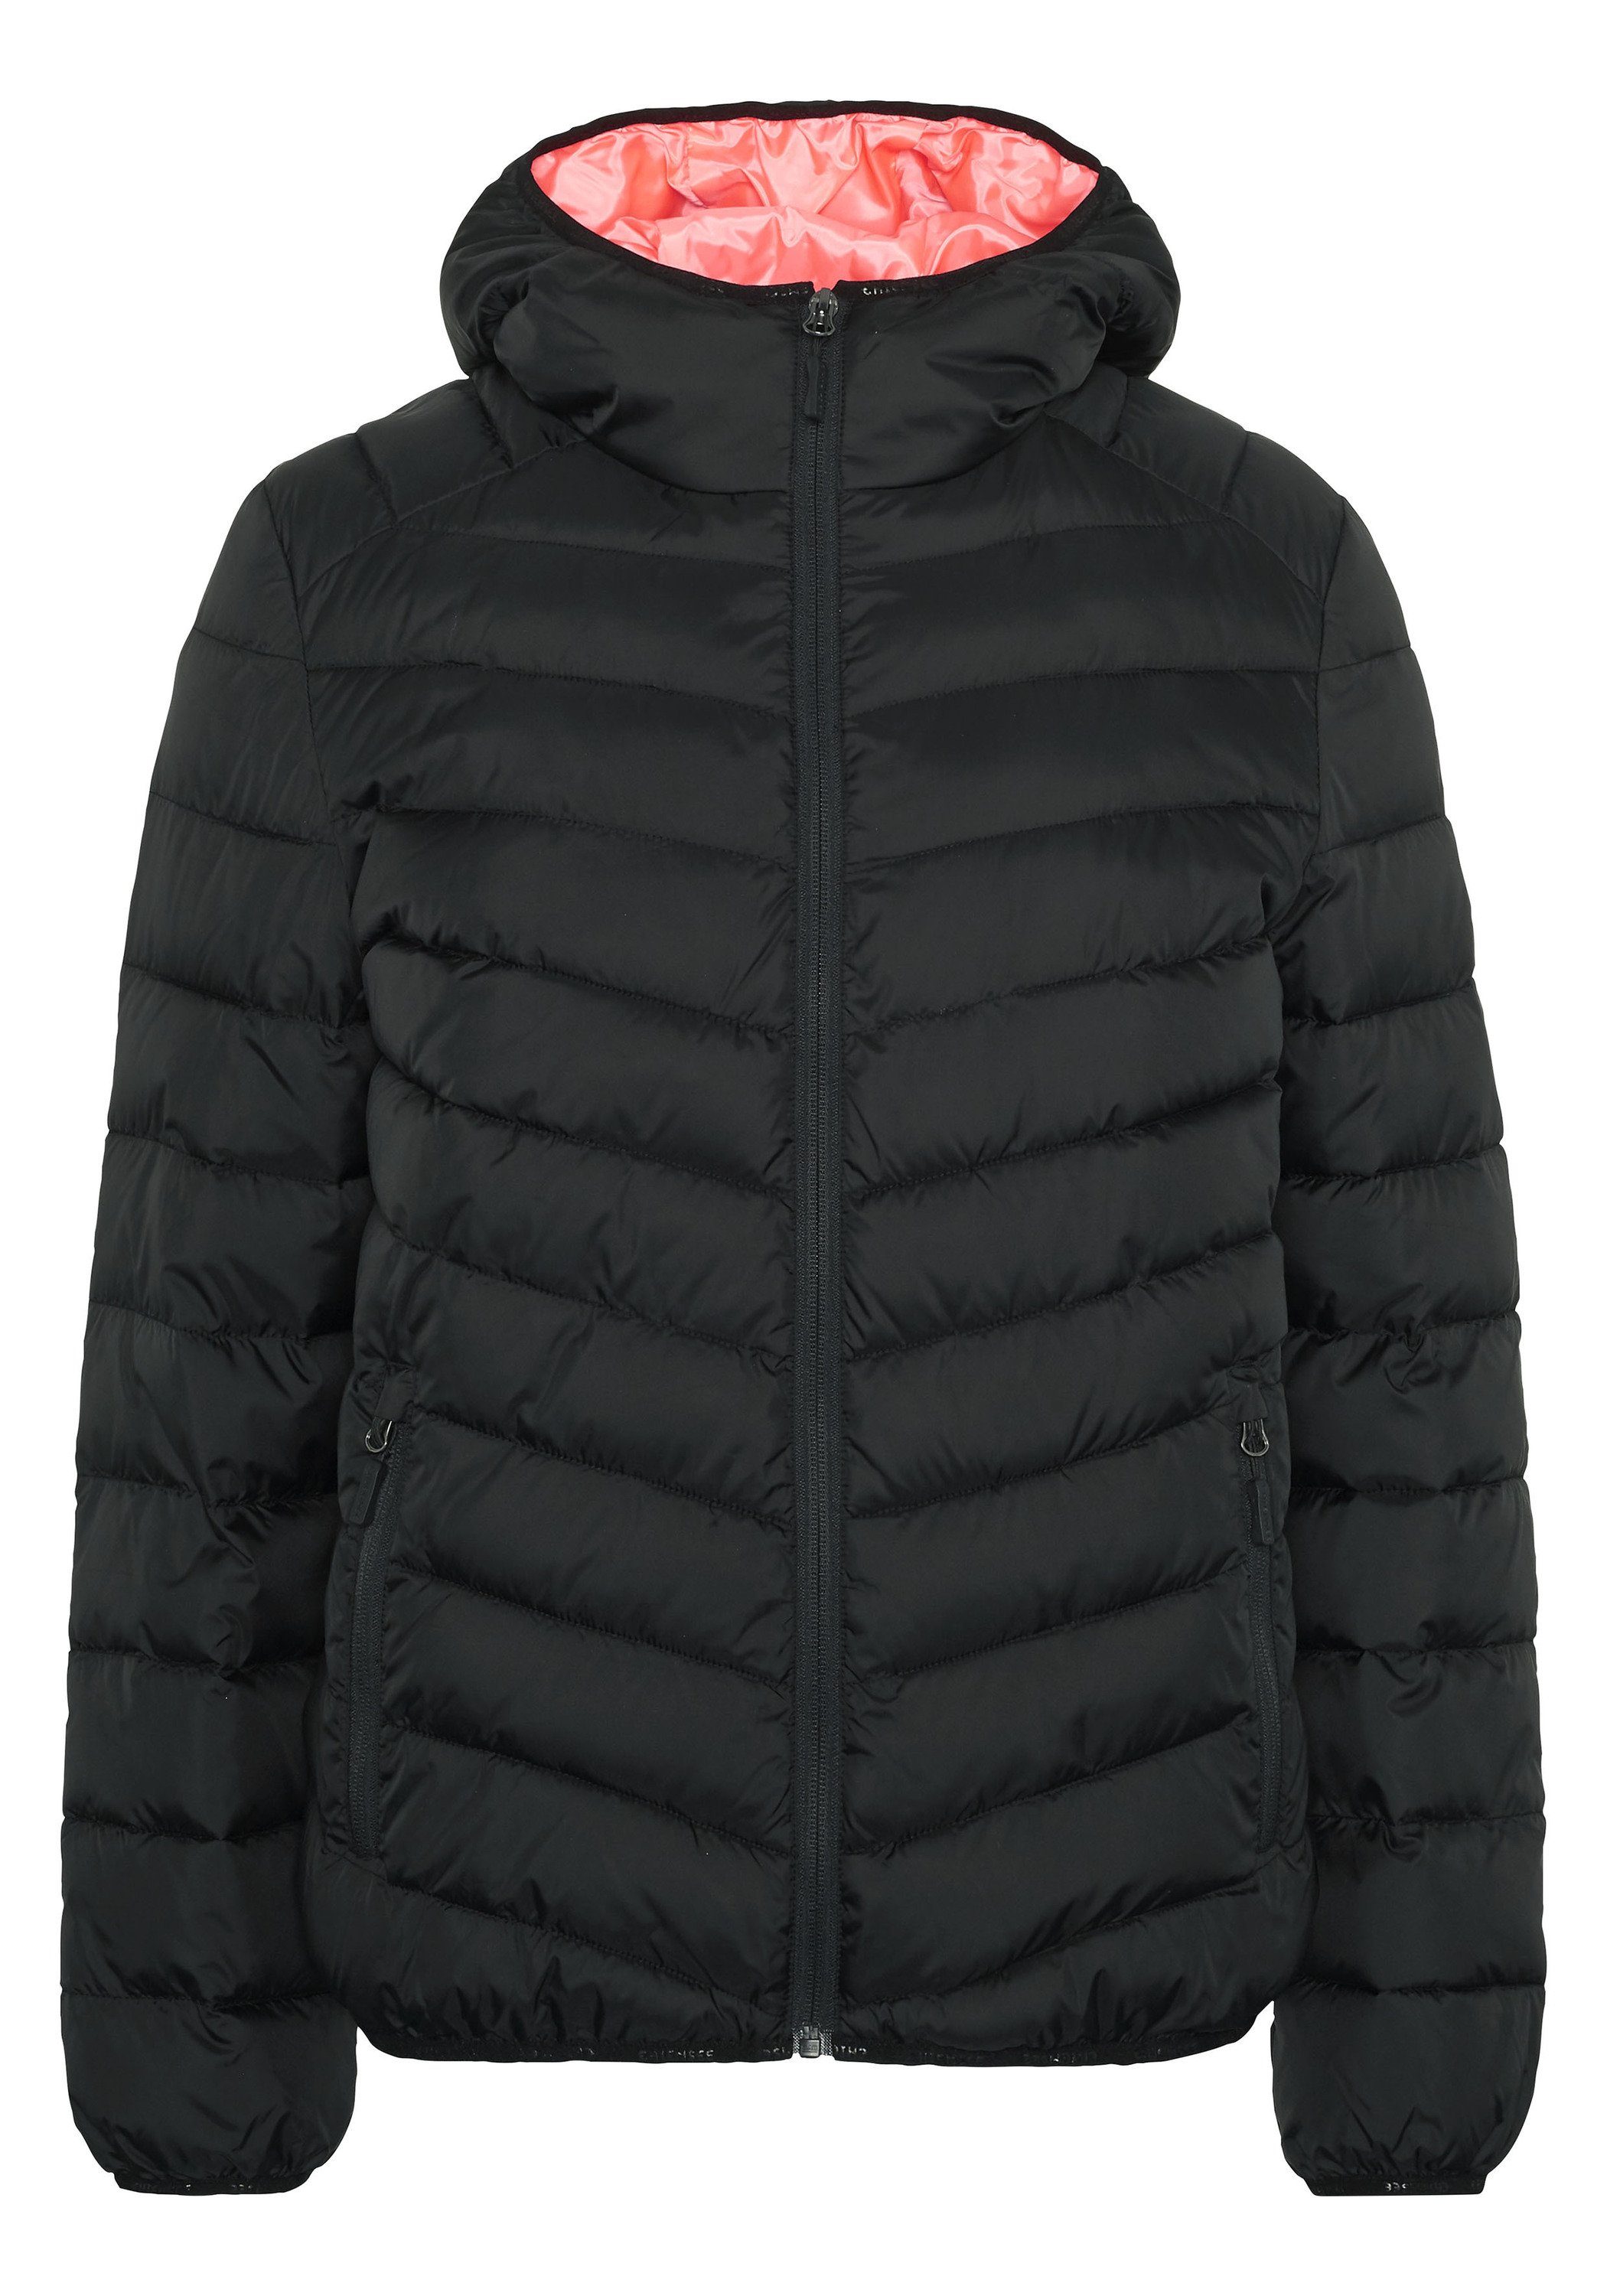 Chiemsee Outdoorjacke Wattierte Jacke in moderner Stepp-Optik 1 schwarz